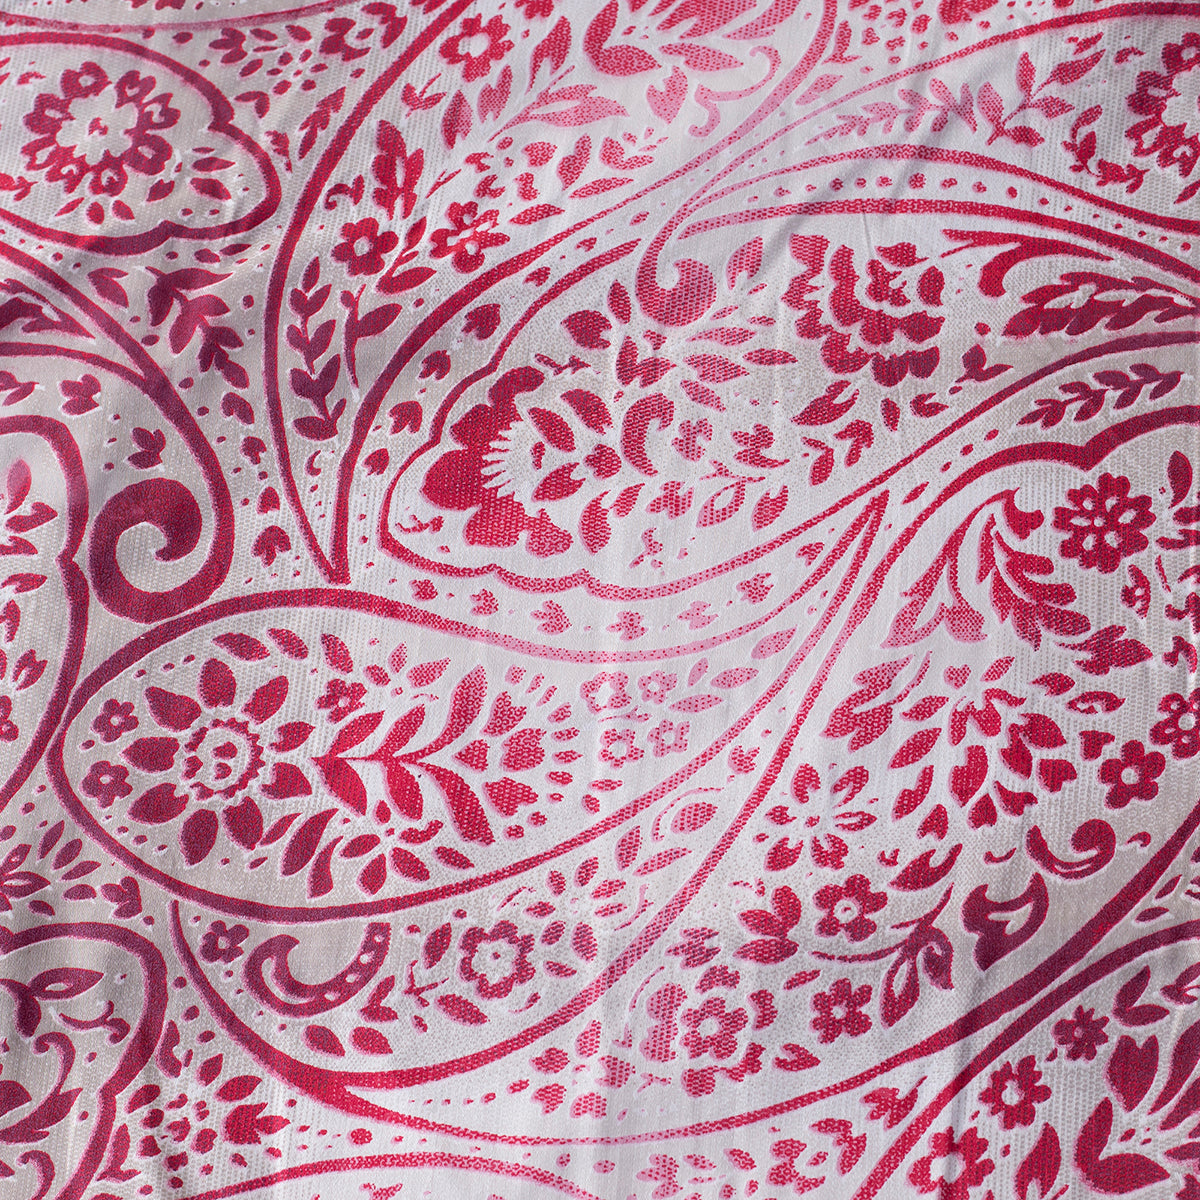 Folklore Transition Ombre Bonanza 100%Cotton Print Single Duvet Cover with Pillow Case